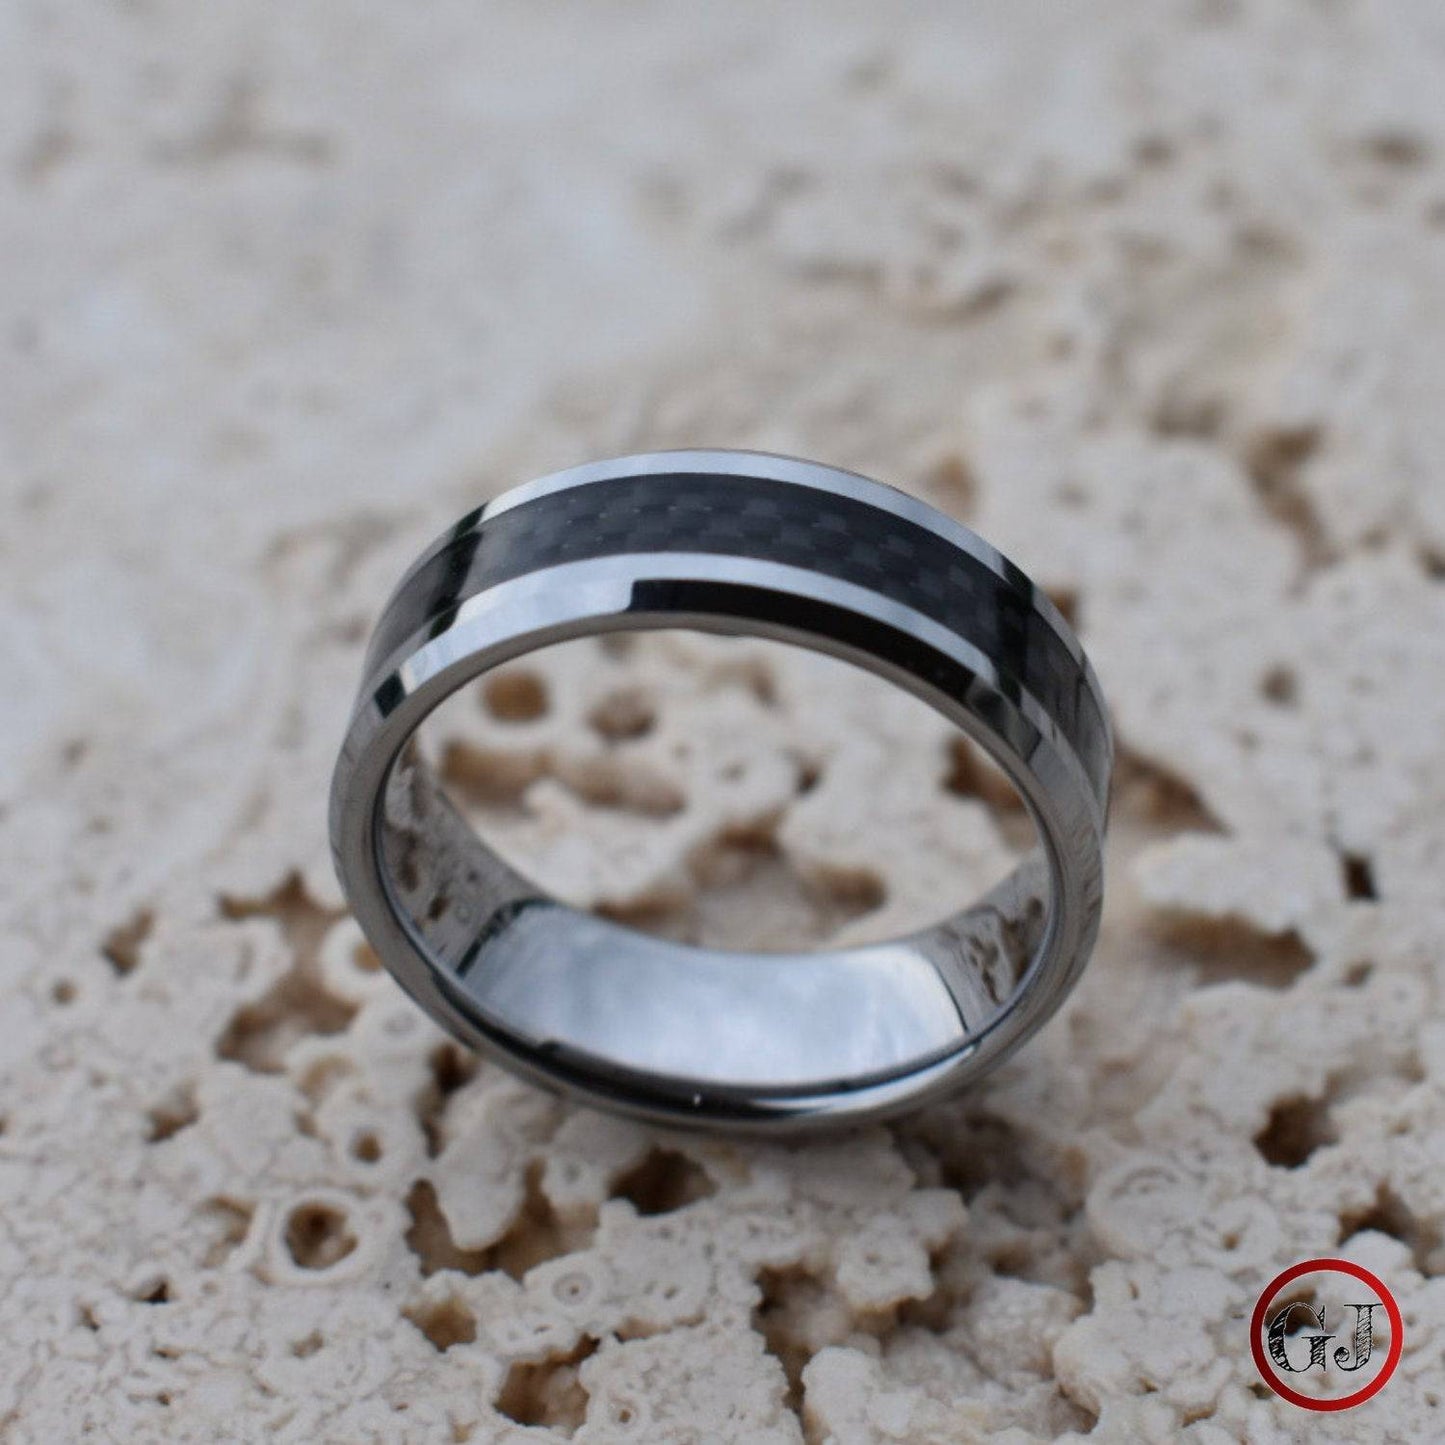 Silver Tungsten Ring with Black Carbon Centre - Tungsten Titans